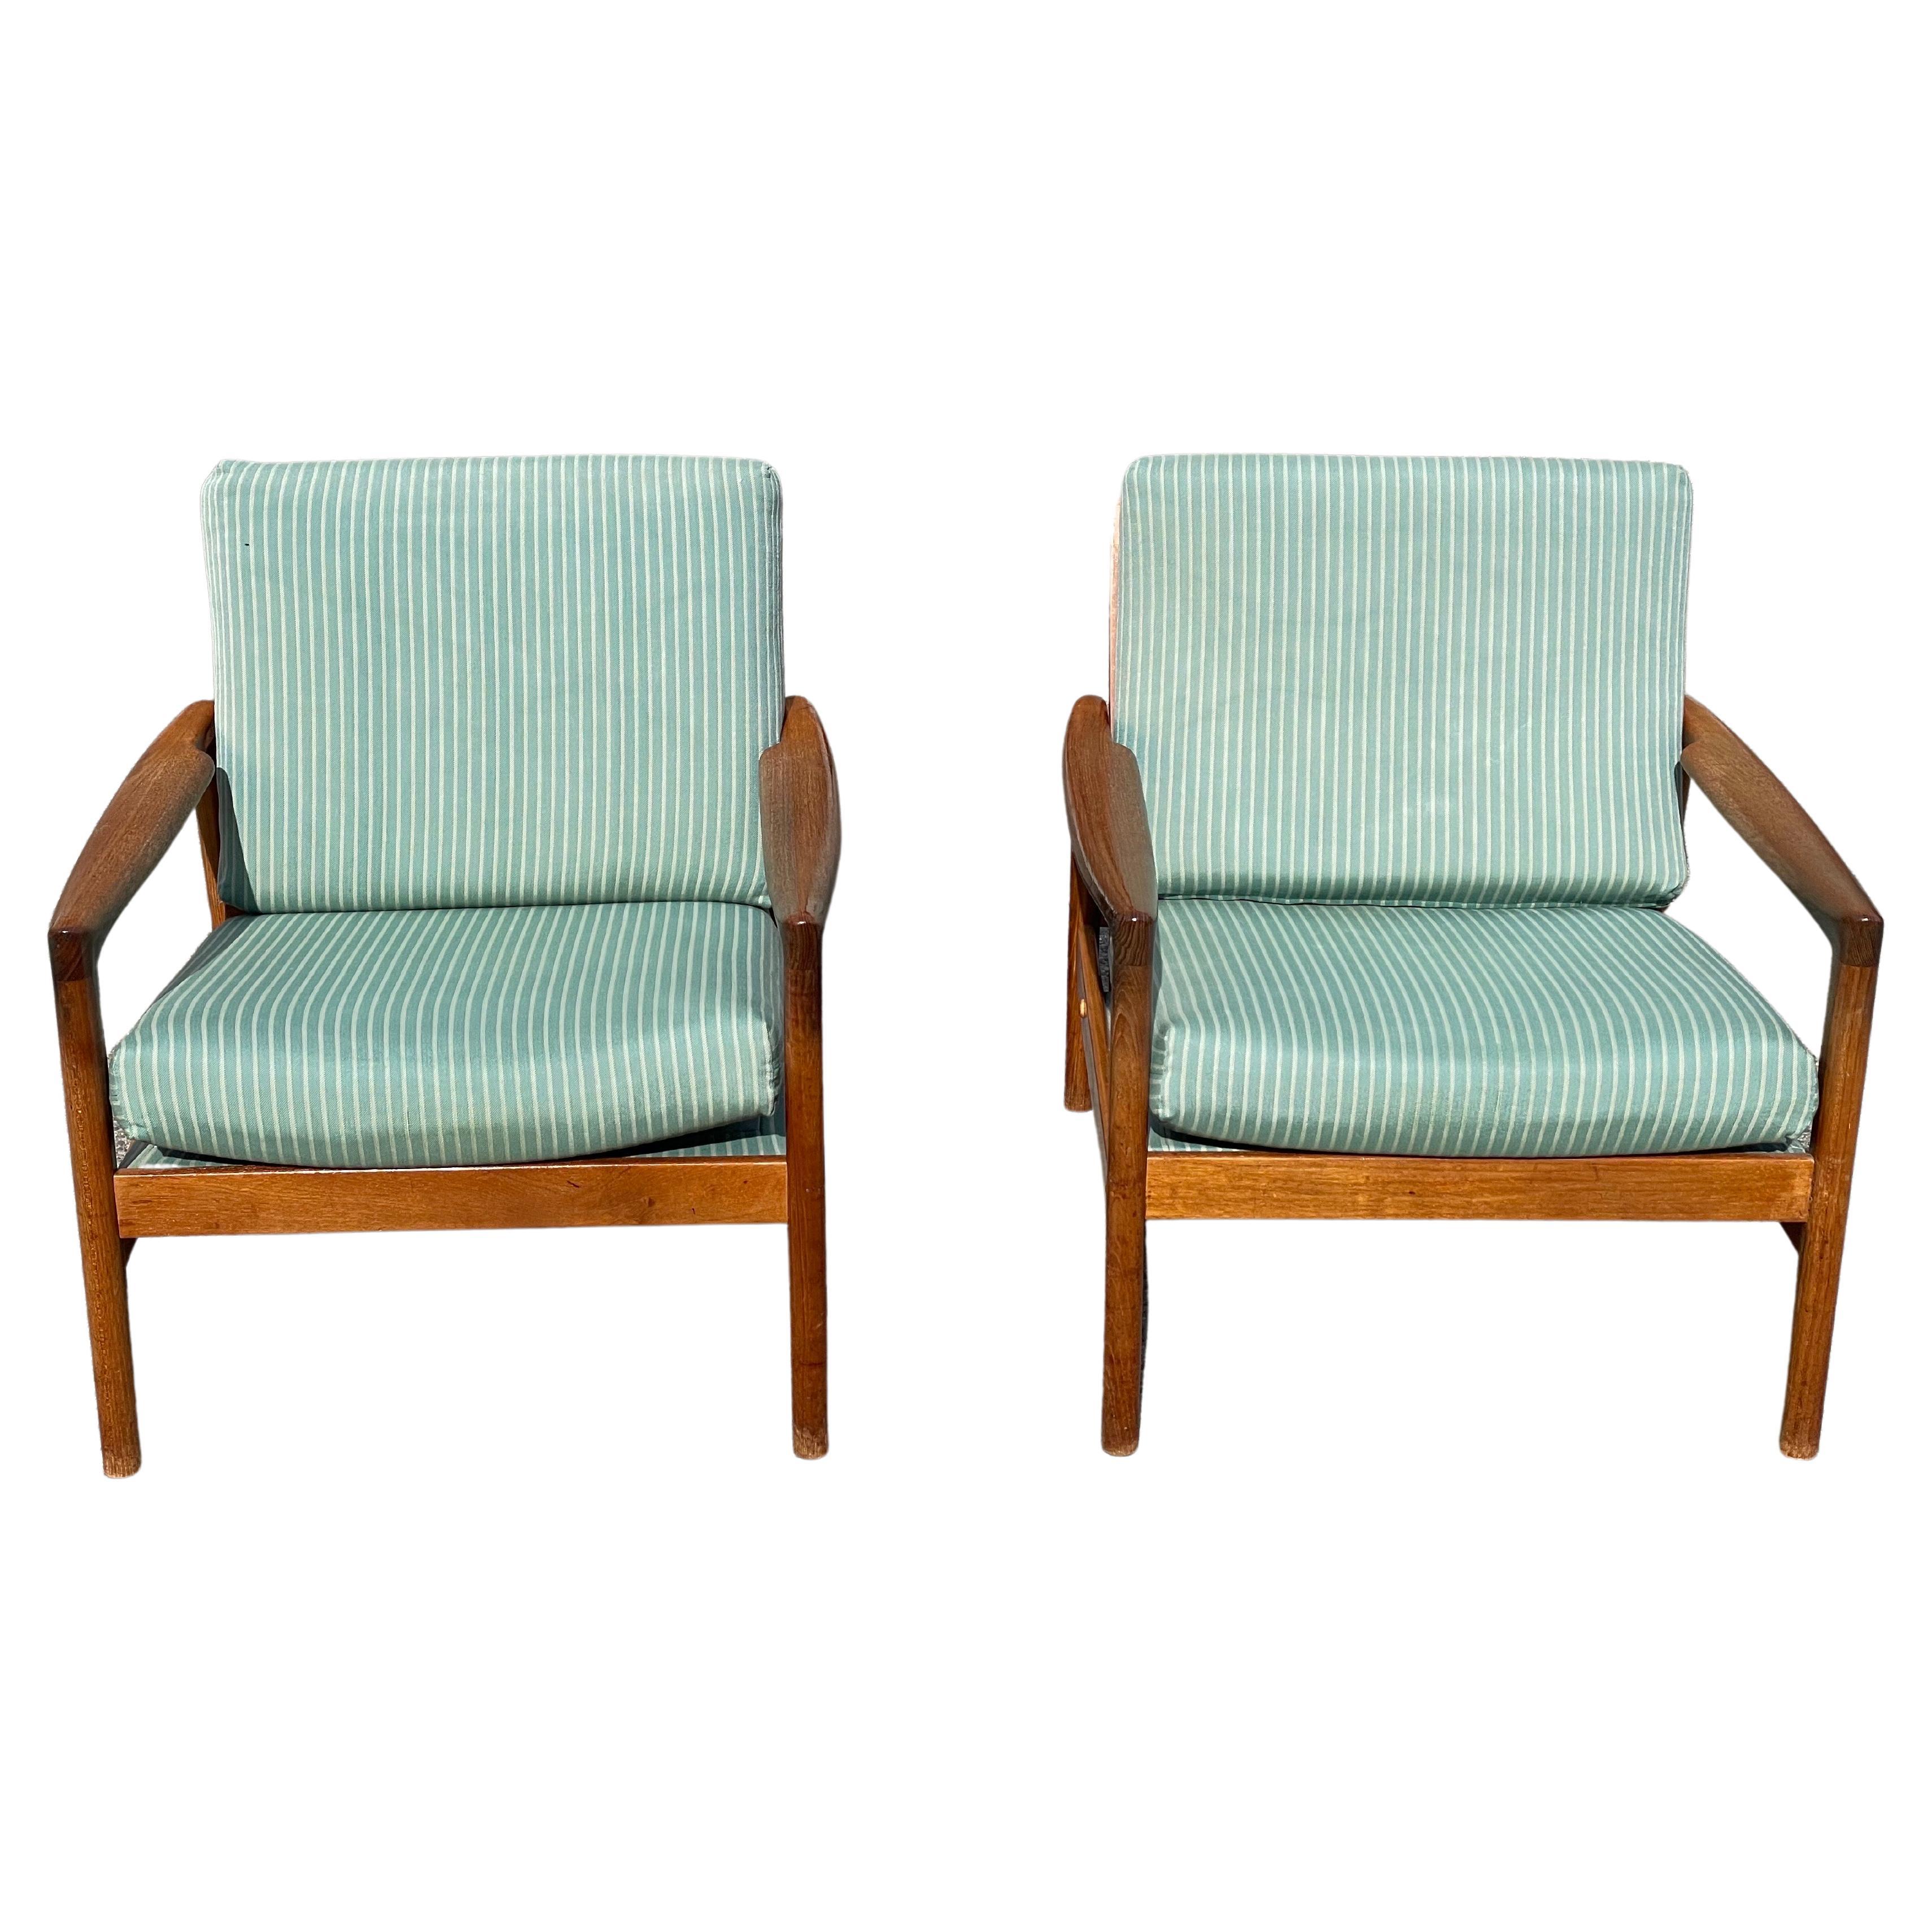 Set of Rare Seen Hans Olsen Teak Chairs by Juul Kristensen from the 1960s